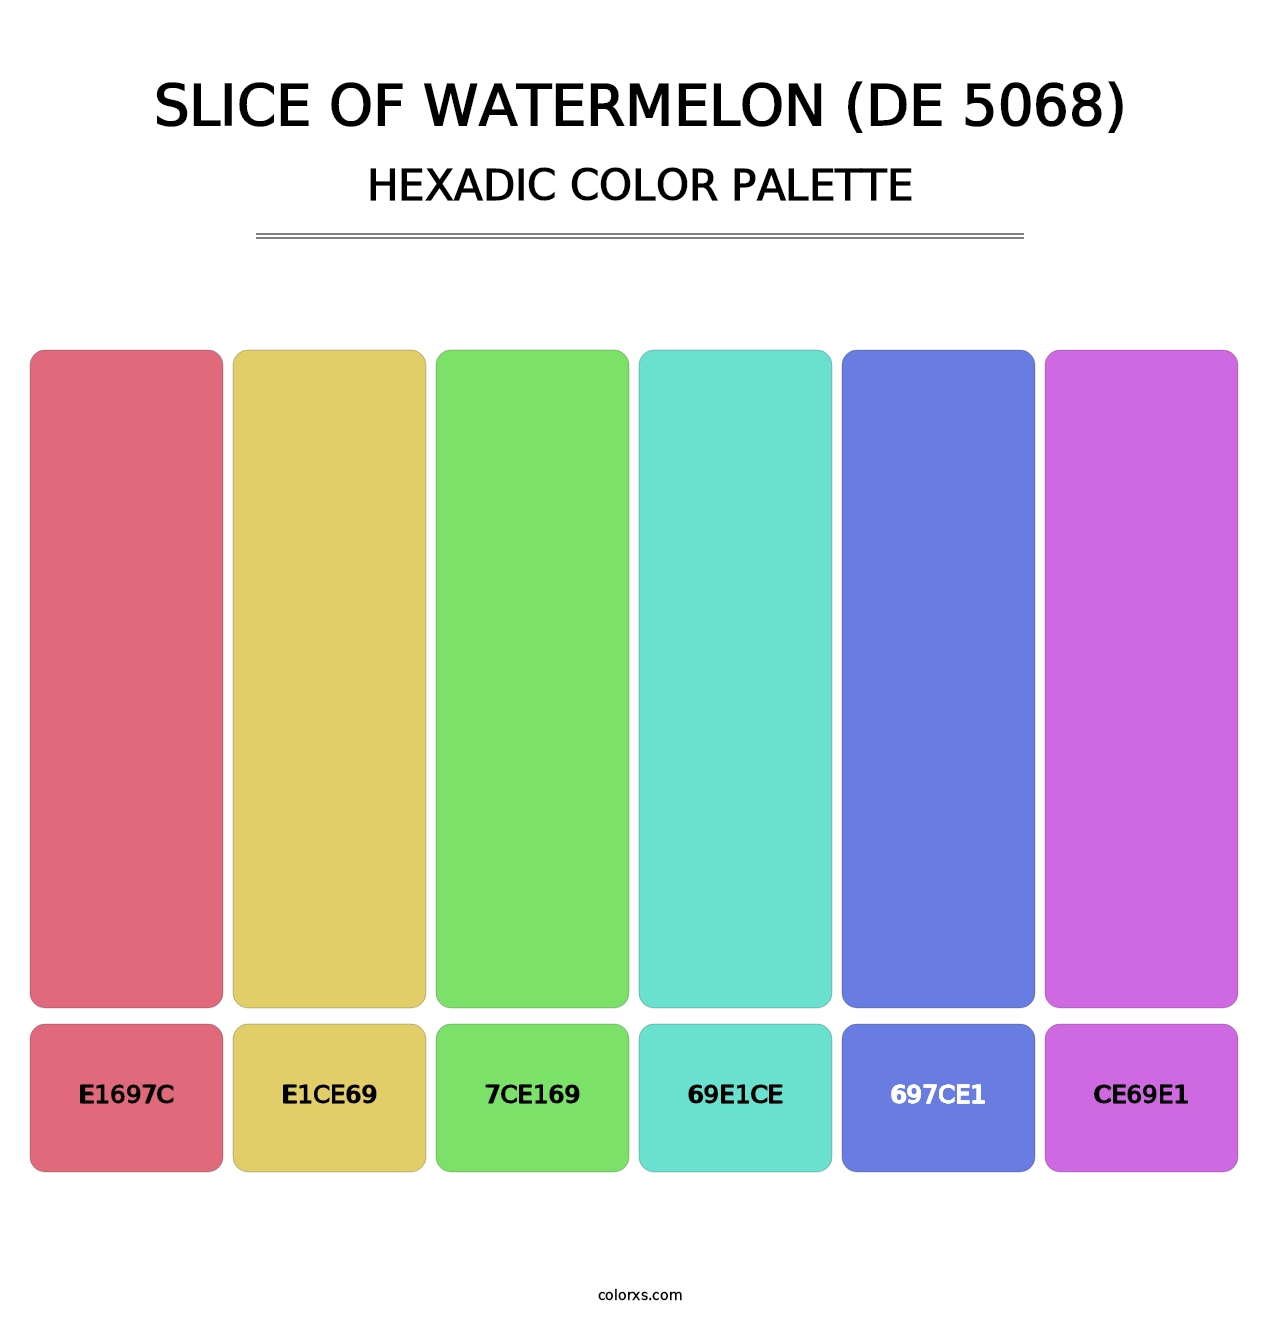 Slice of Watermelon (DE 5068) - Hexadic Color Palette